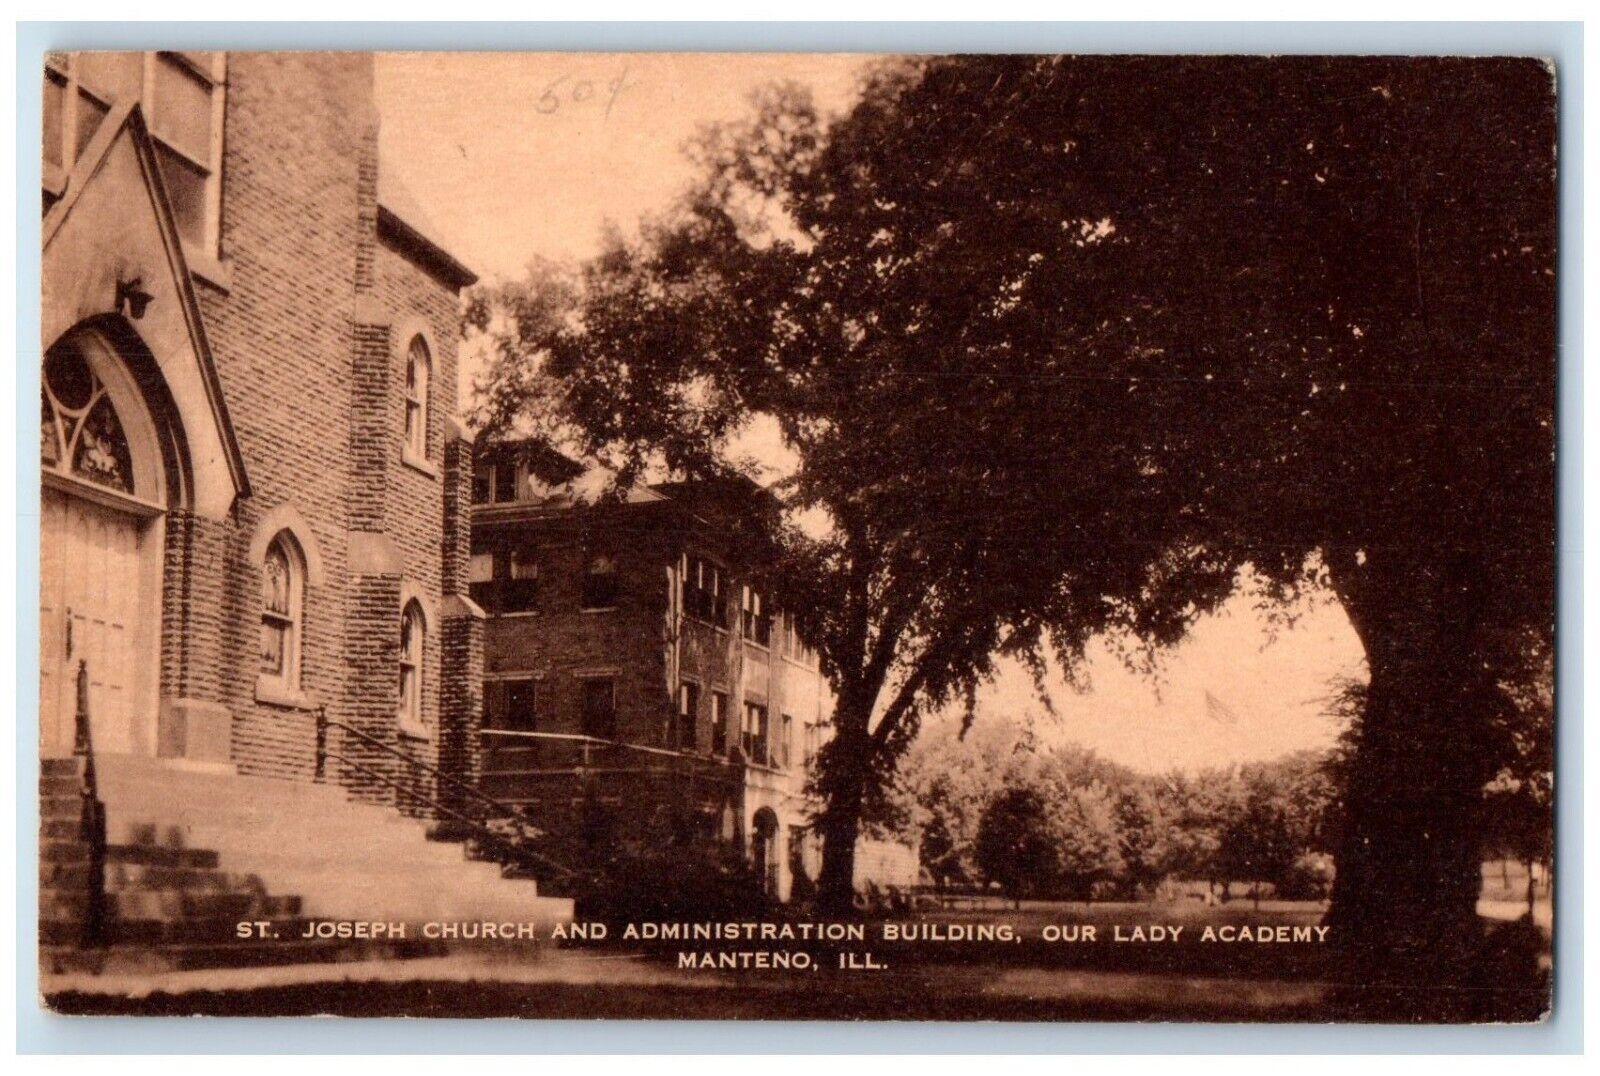 c1940 St. Joseph Church Administration Building Manteno Illinois Artvue Postcard